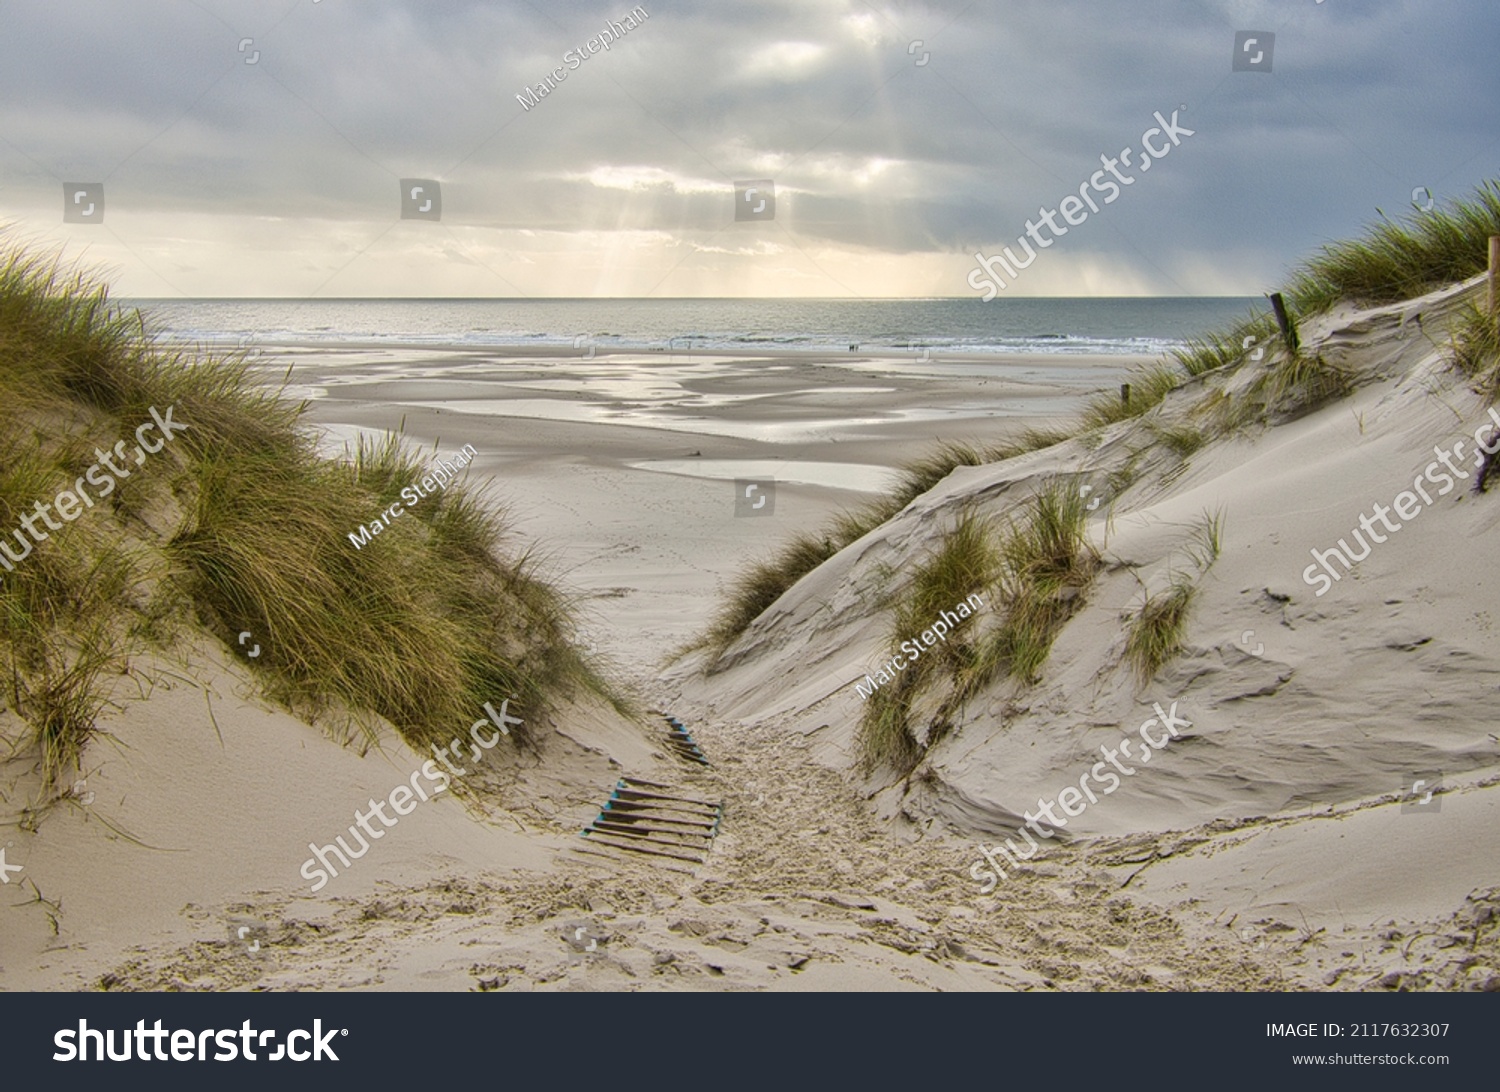 Dunes at the Beach of Amrum, Germany, Europe #2117632307